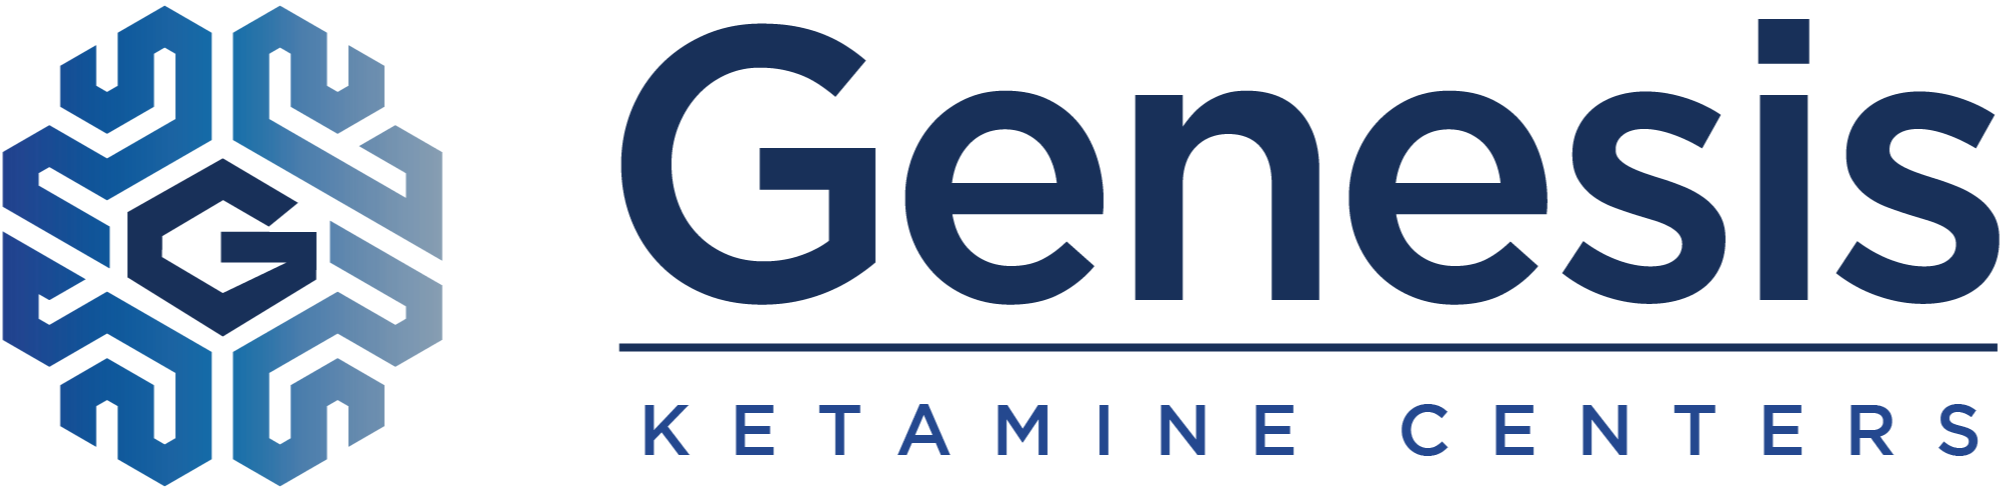 Genesis Ketamine Centers